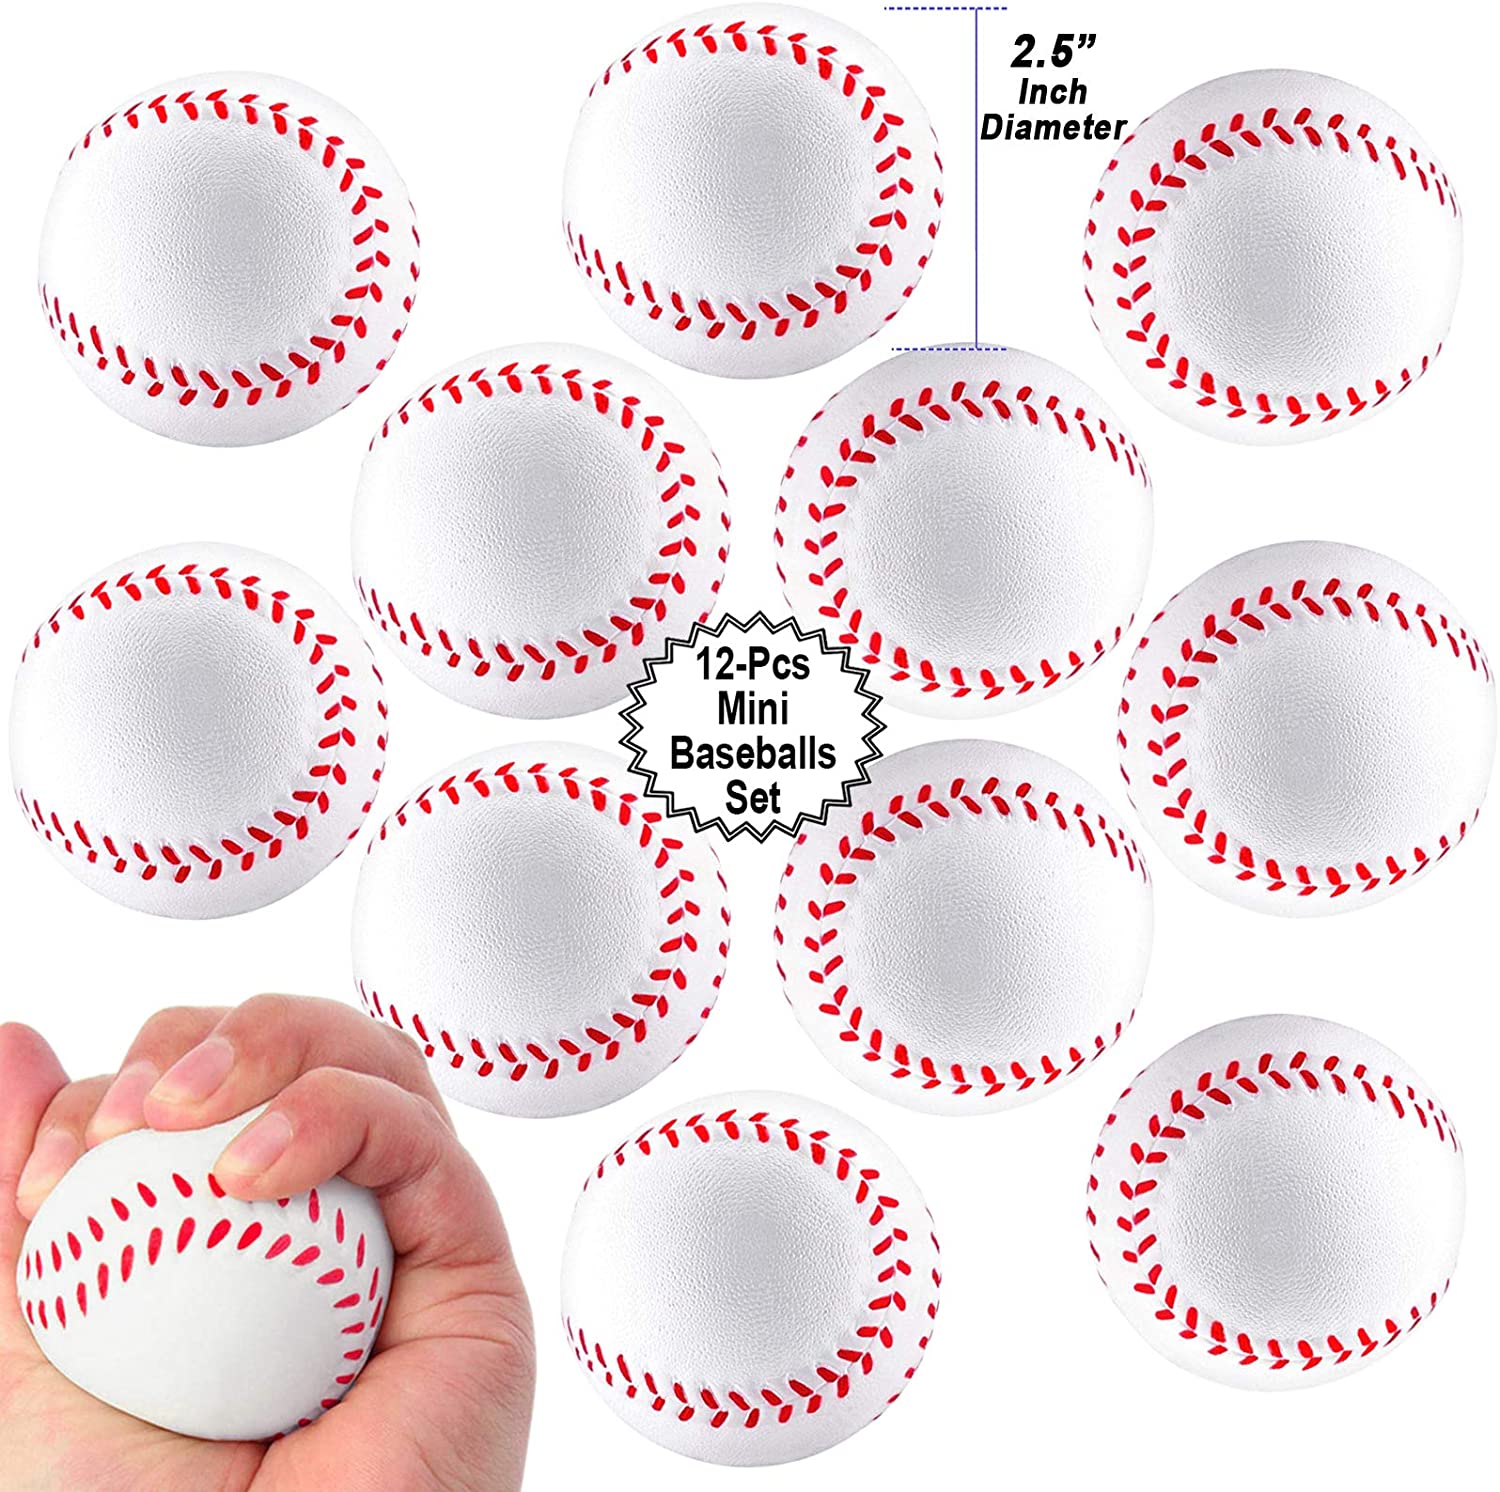 mini baseballs